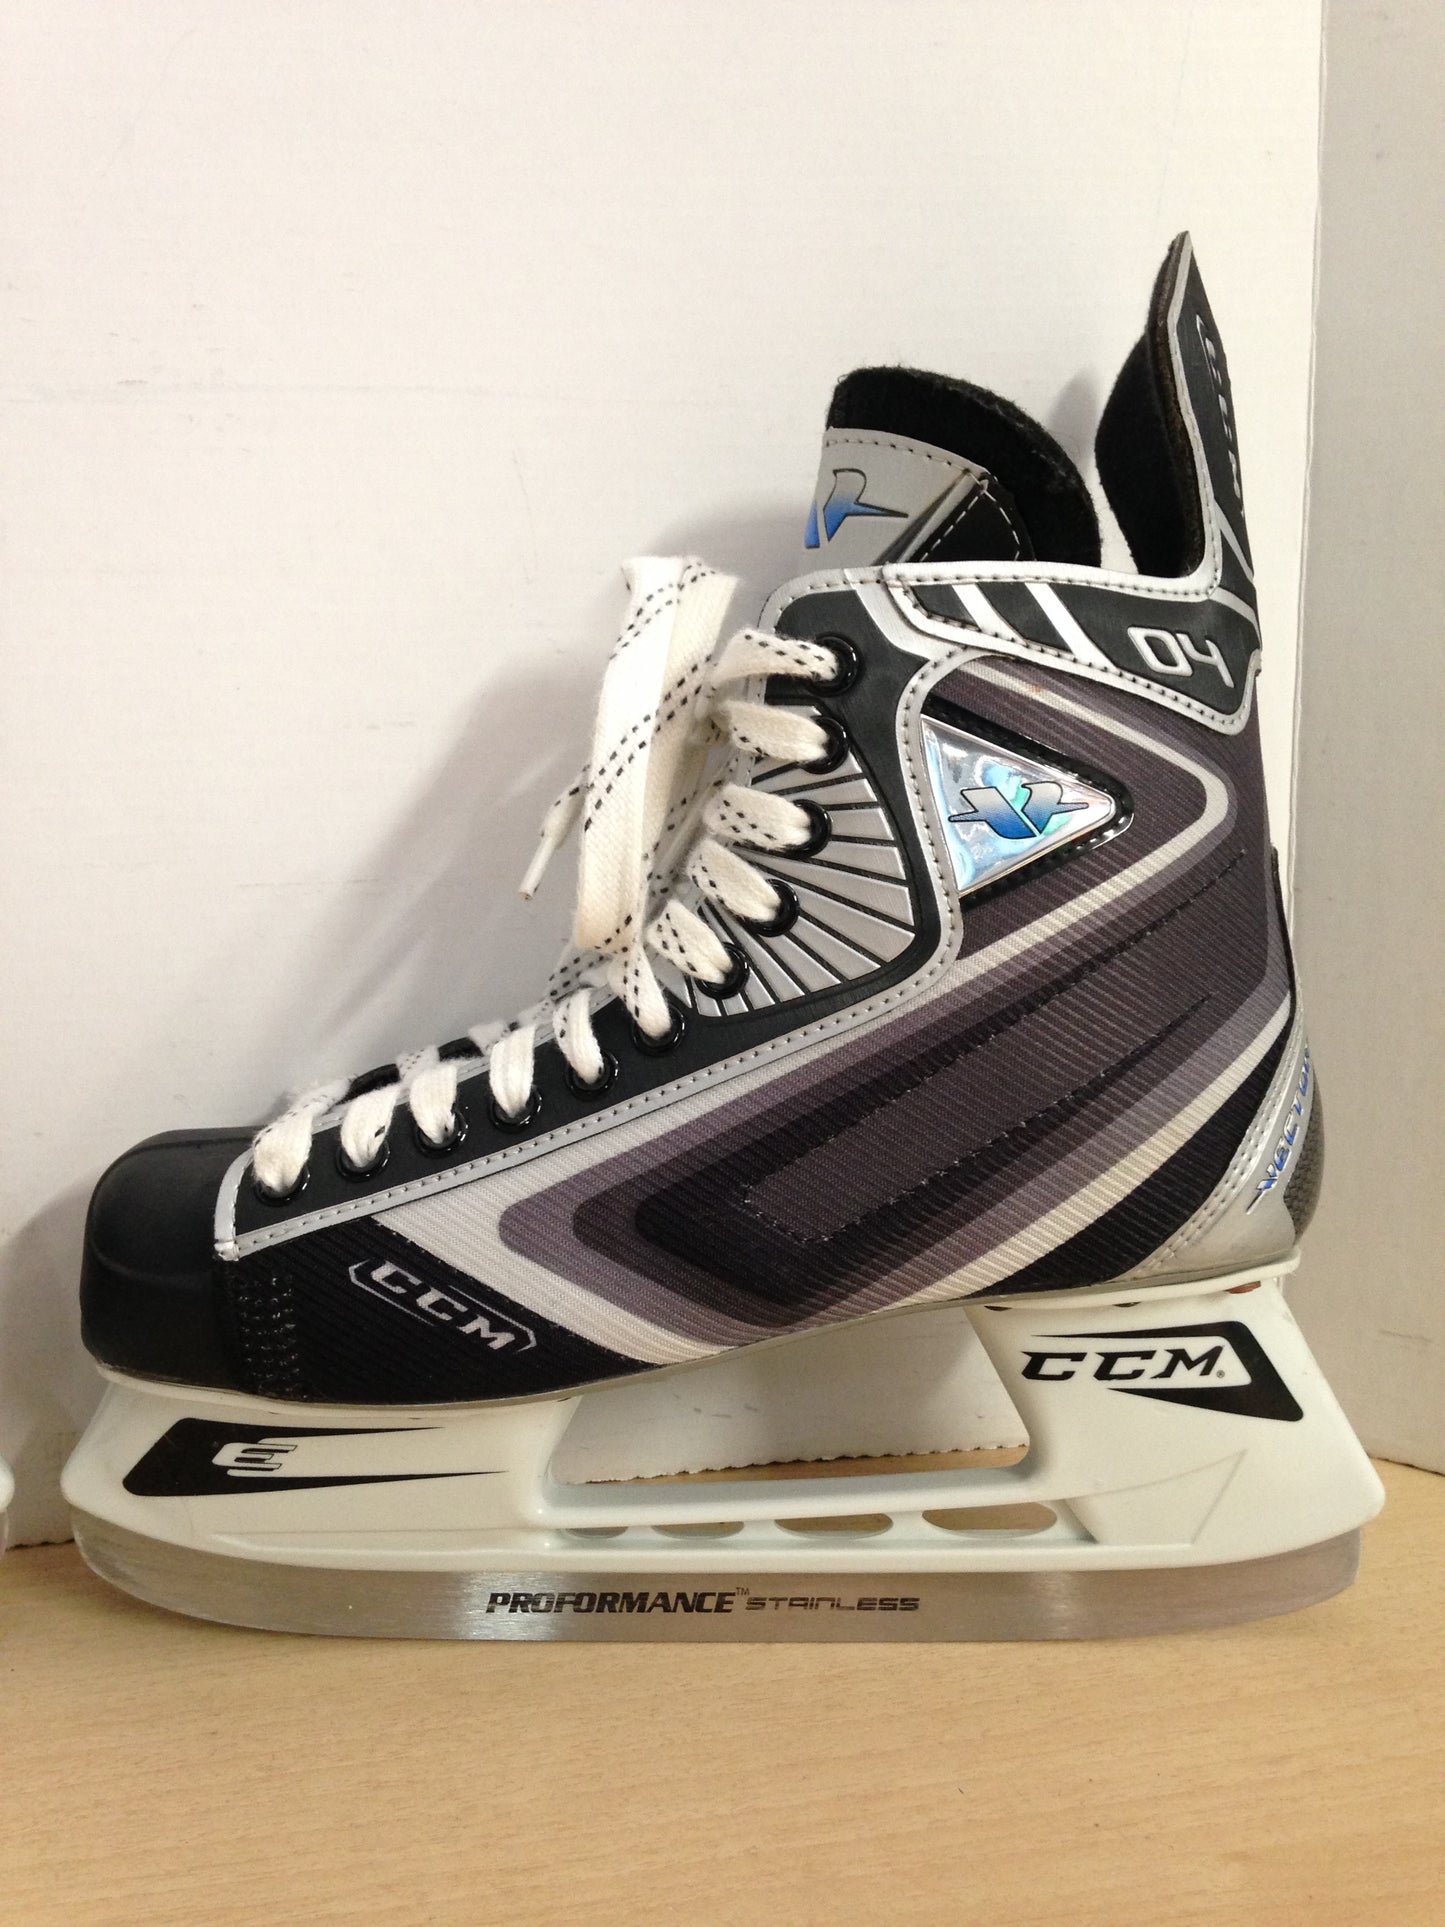 Hockey Skates Men's Size 8.5 Shoe Size CCM Vector New Demo Model